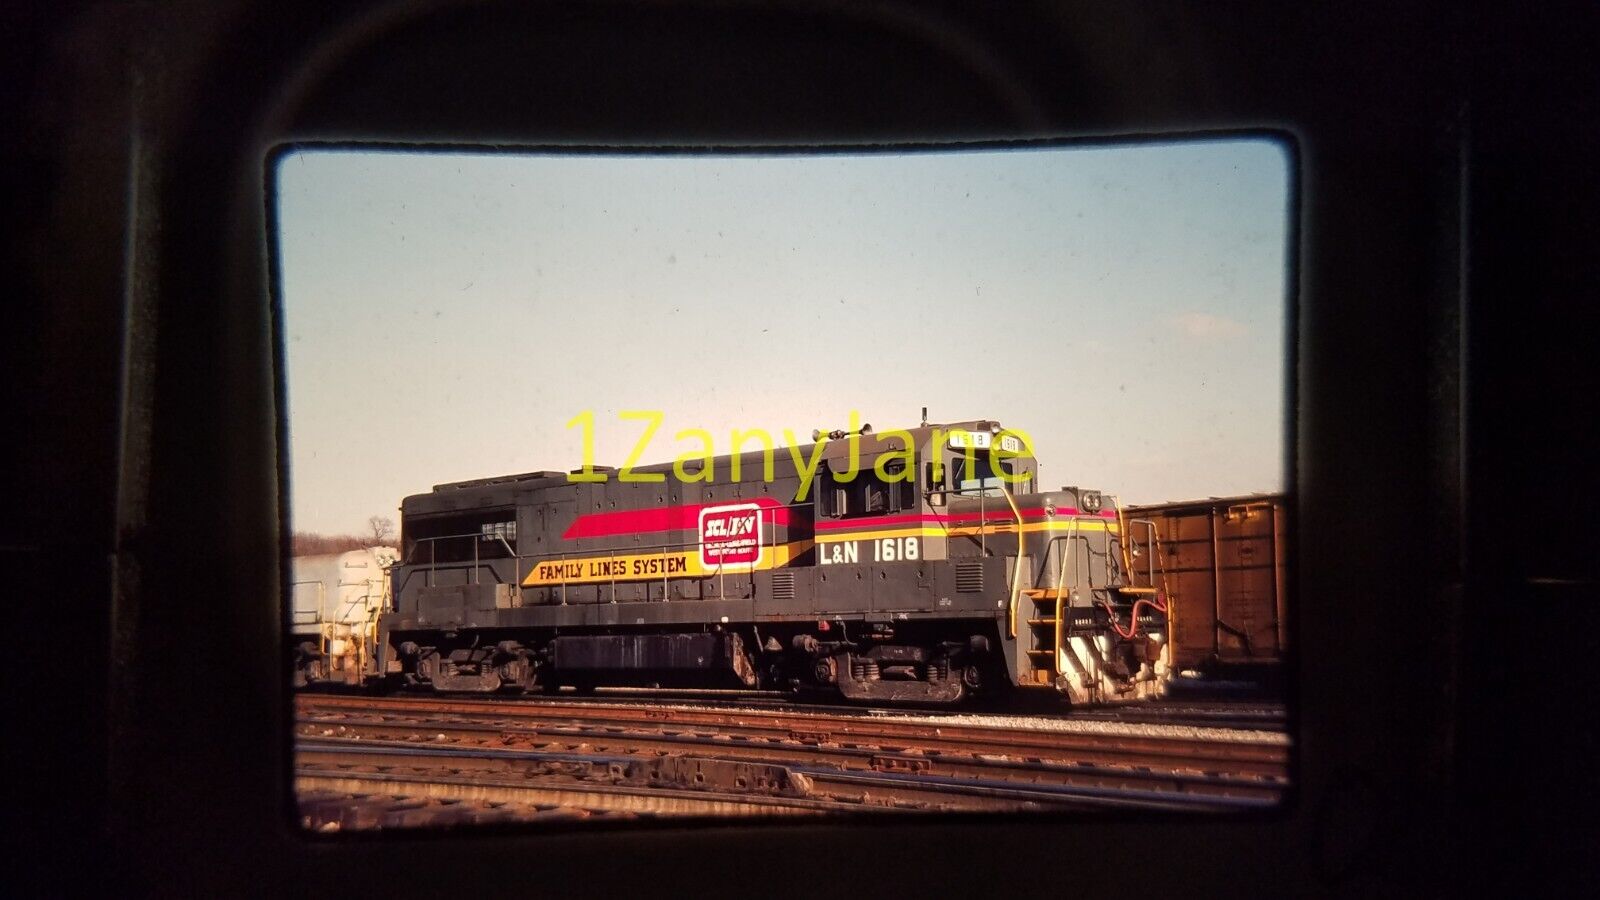 ON11 TRAIN ENGINE LOCOMOTIVE 35MM SLIDE L & N 1618, DECOURSEY, KY 1980